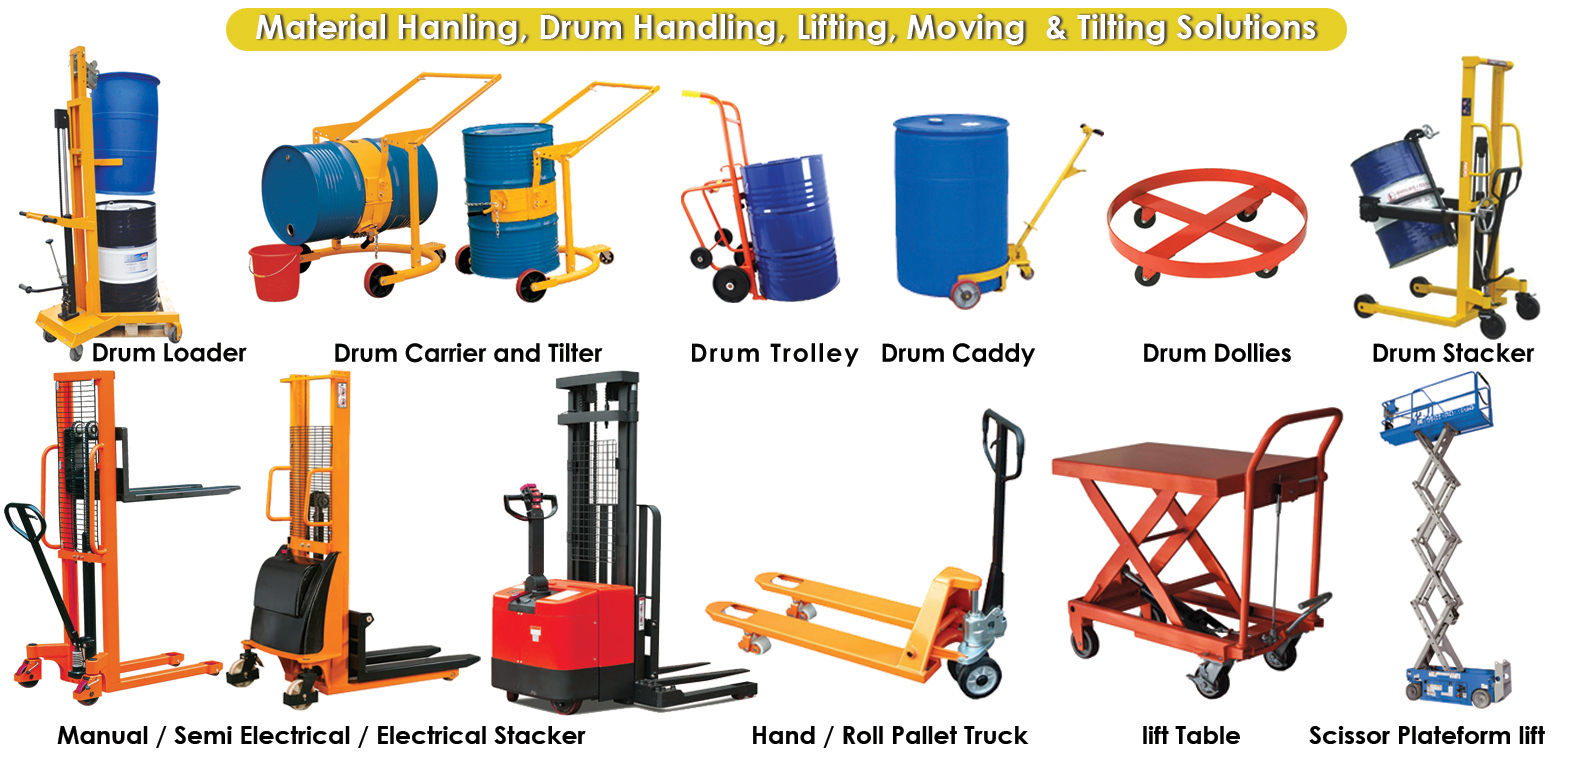 Material handling equipment, hand pallet truck lifter jack trolley in pakistan, warehousing equipments, drum lifting and handling solutions in Pakistan.